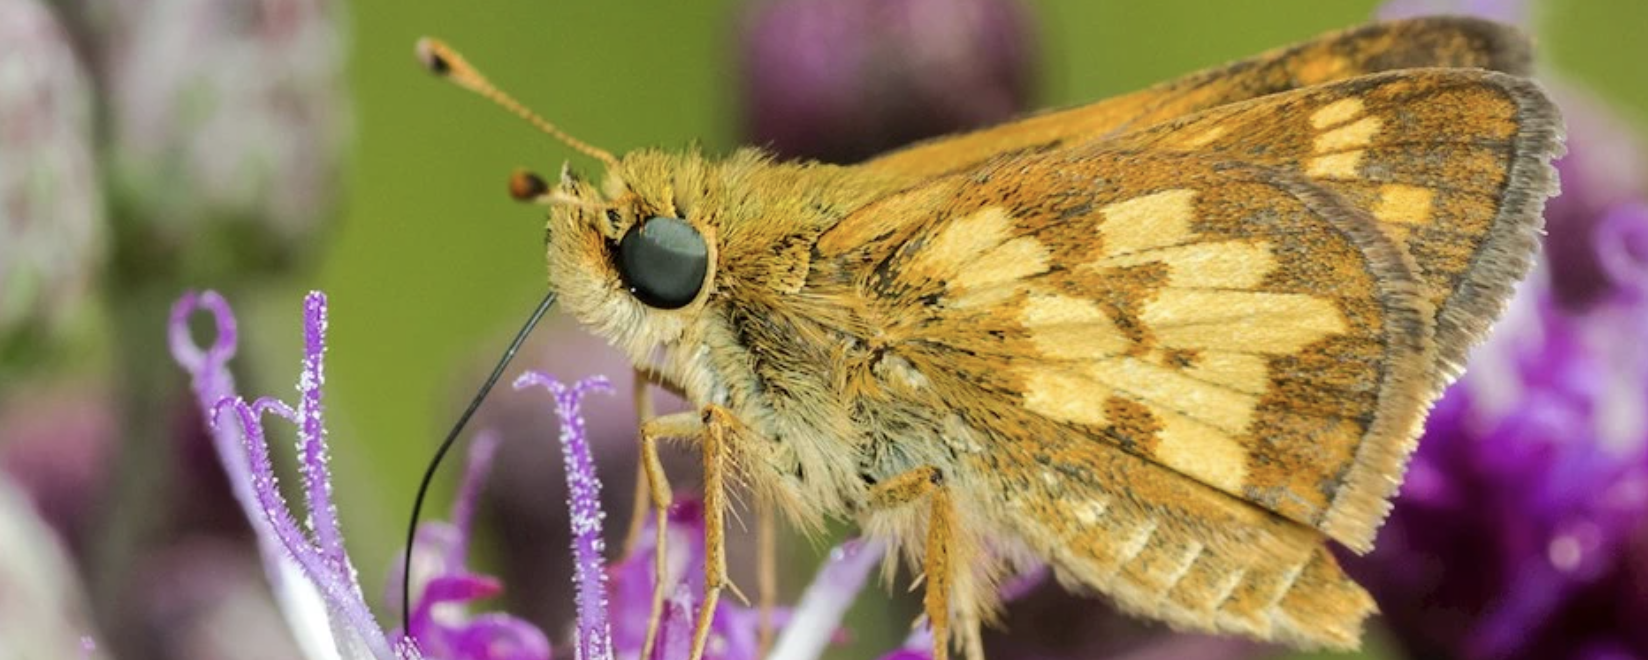 Close-up of moth on purple flower